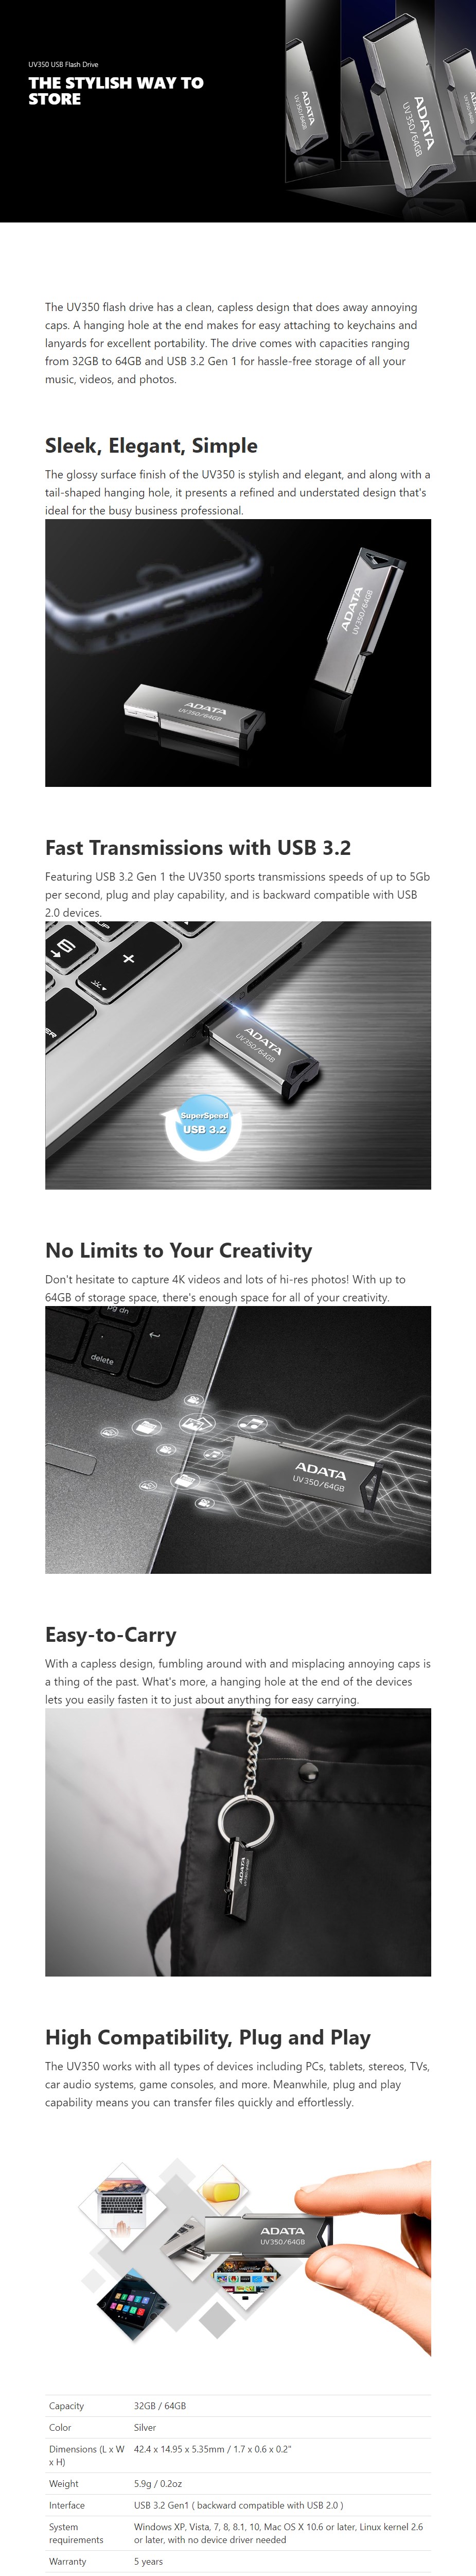 ADATA 64GB UV350 USB 3.2 Flash Drive - Silver - Overview 1